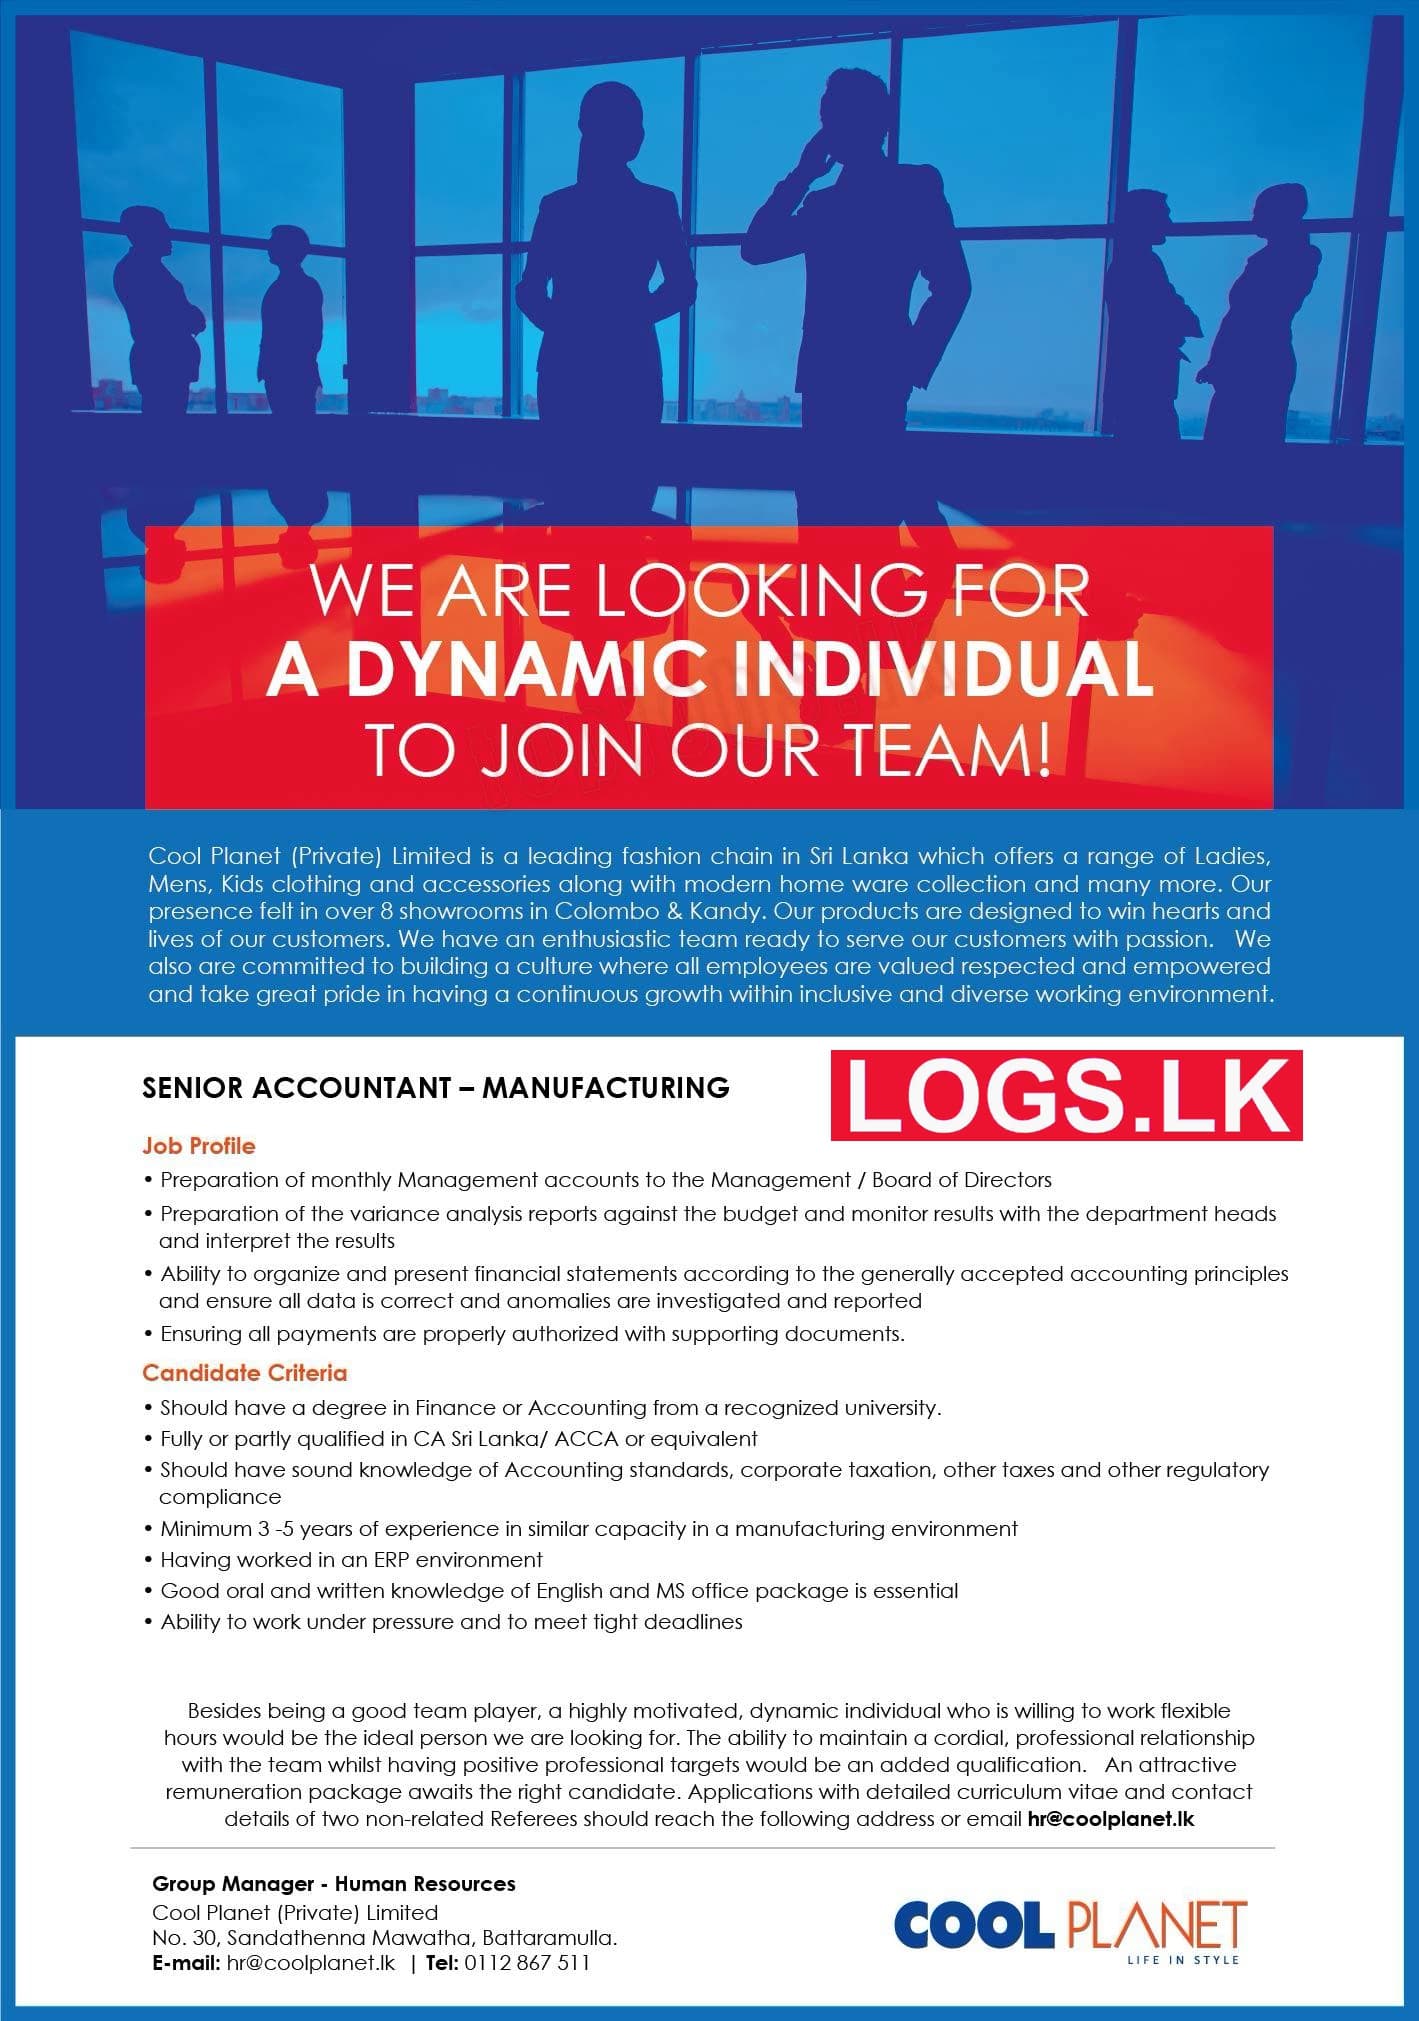 Senior Accountant (Manufacturing) Vacancy at Cool Planet (Pvt) Ltd Job Vacancies